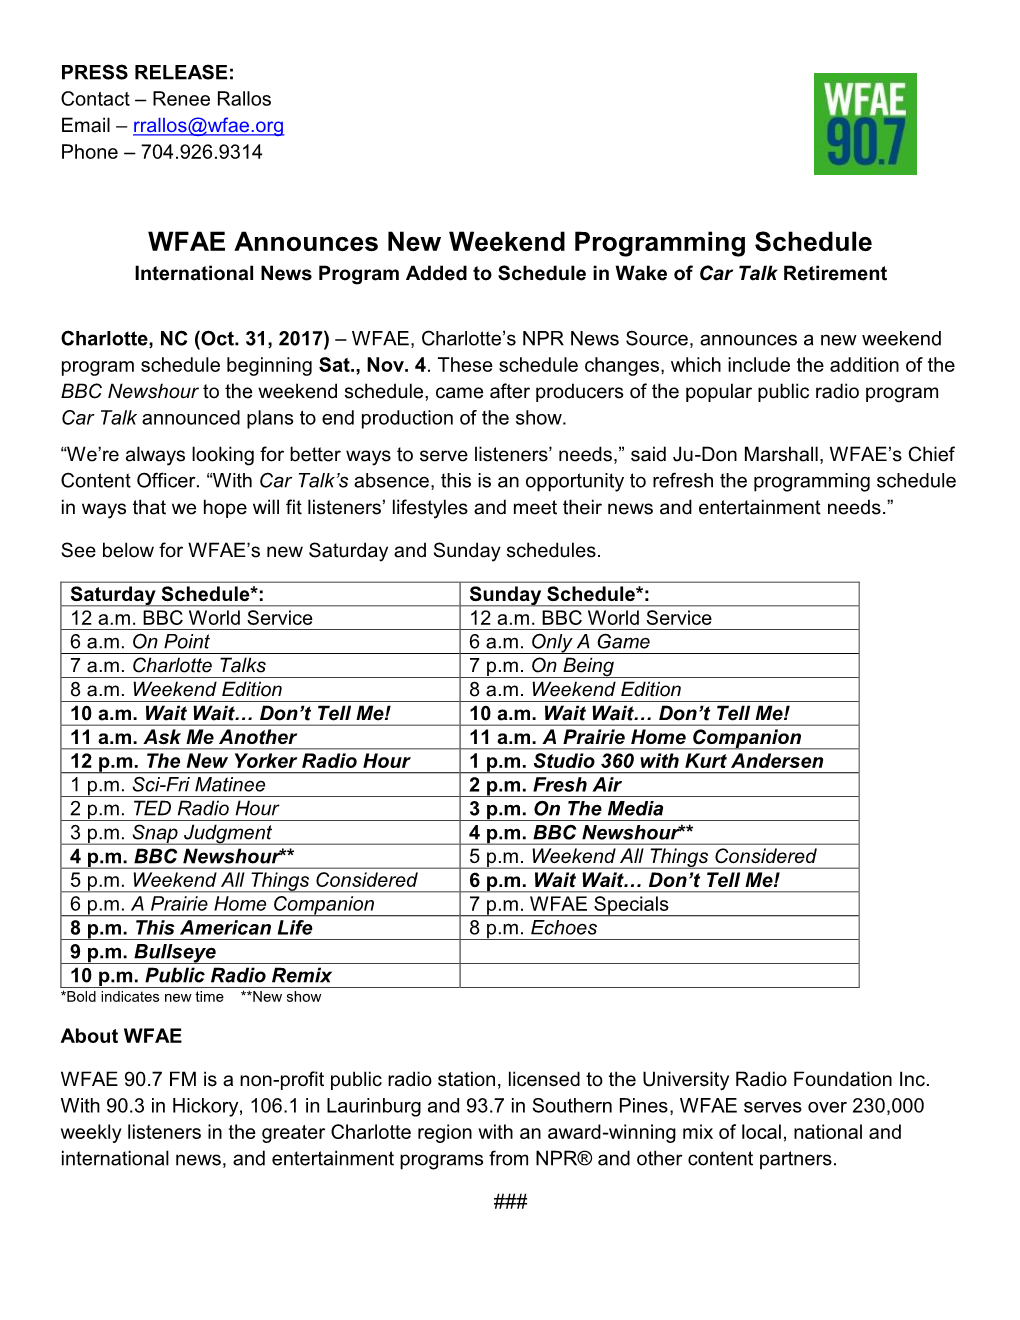 WFAE Announces New Weekend Programming Schedule International News Program Added to Schedule in Wake of Car Talk Retirement